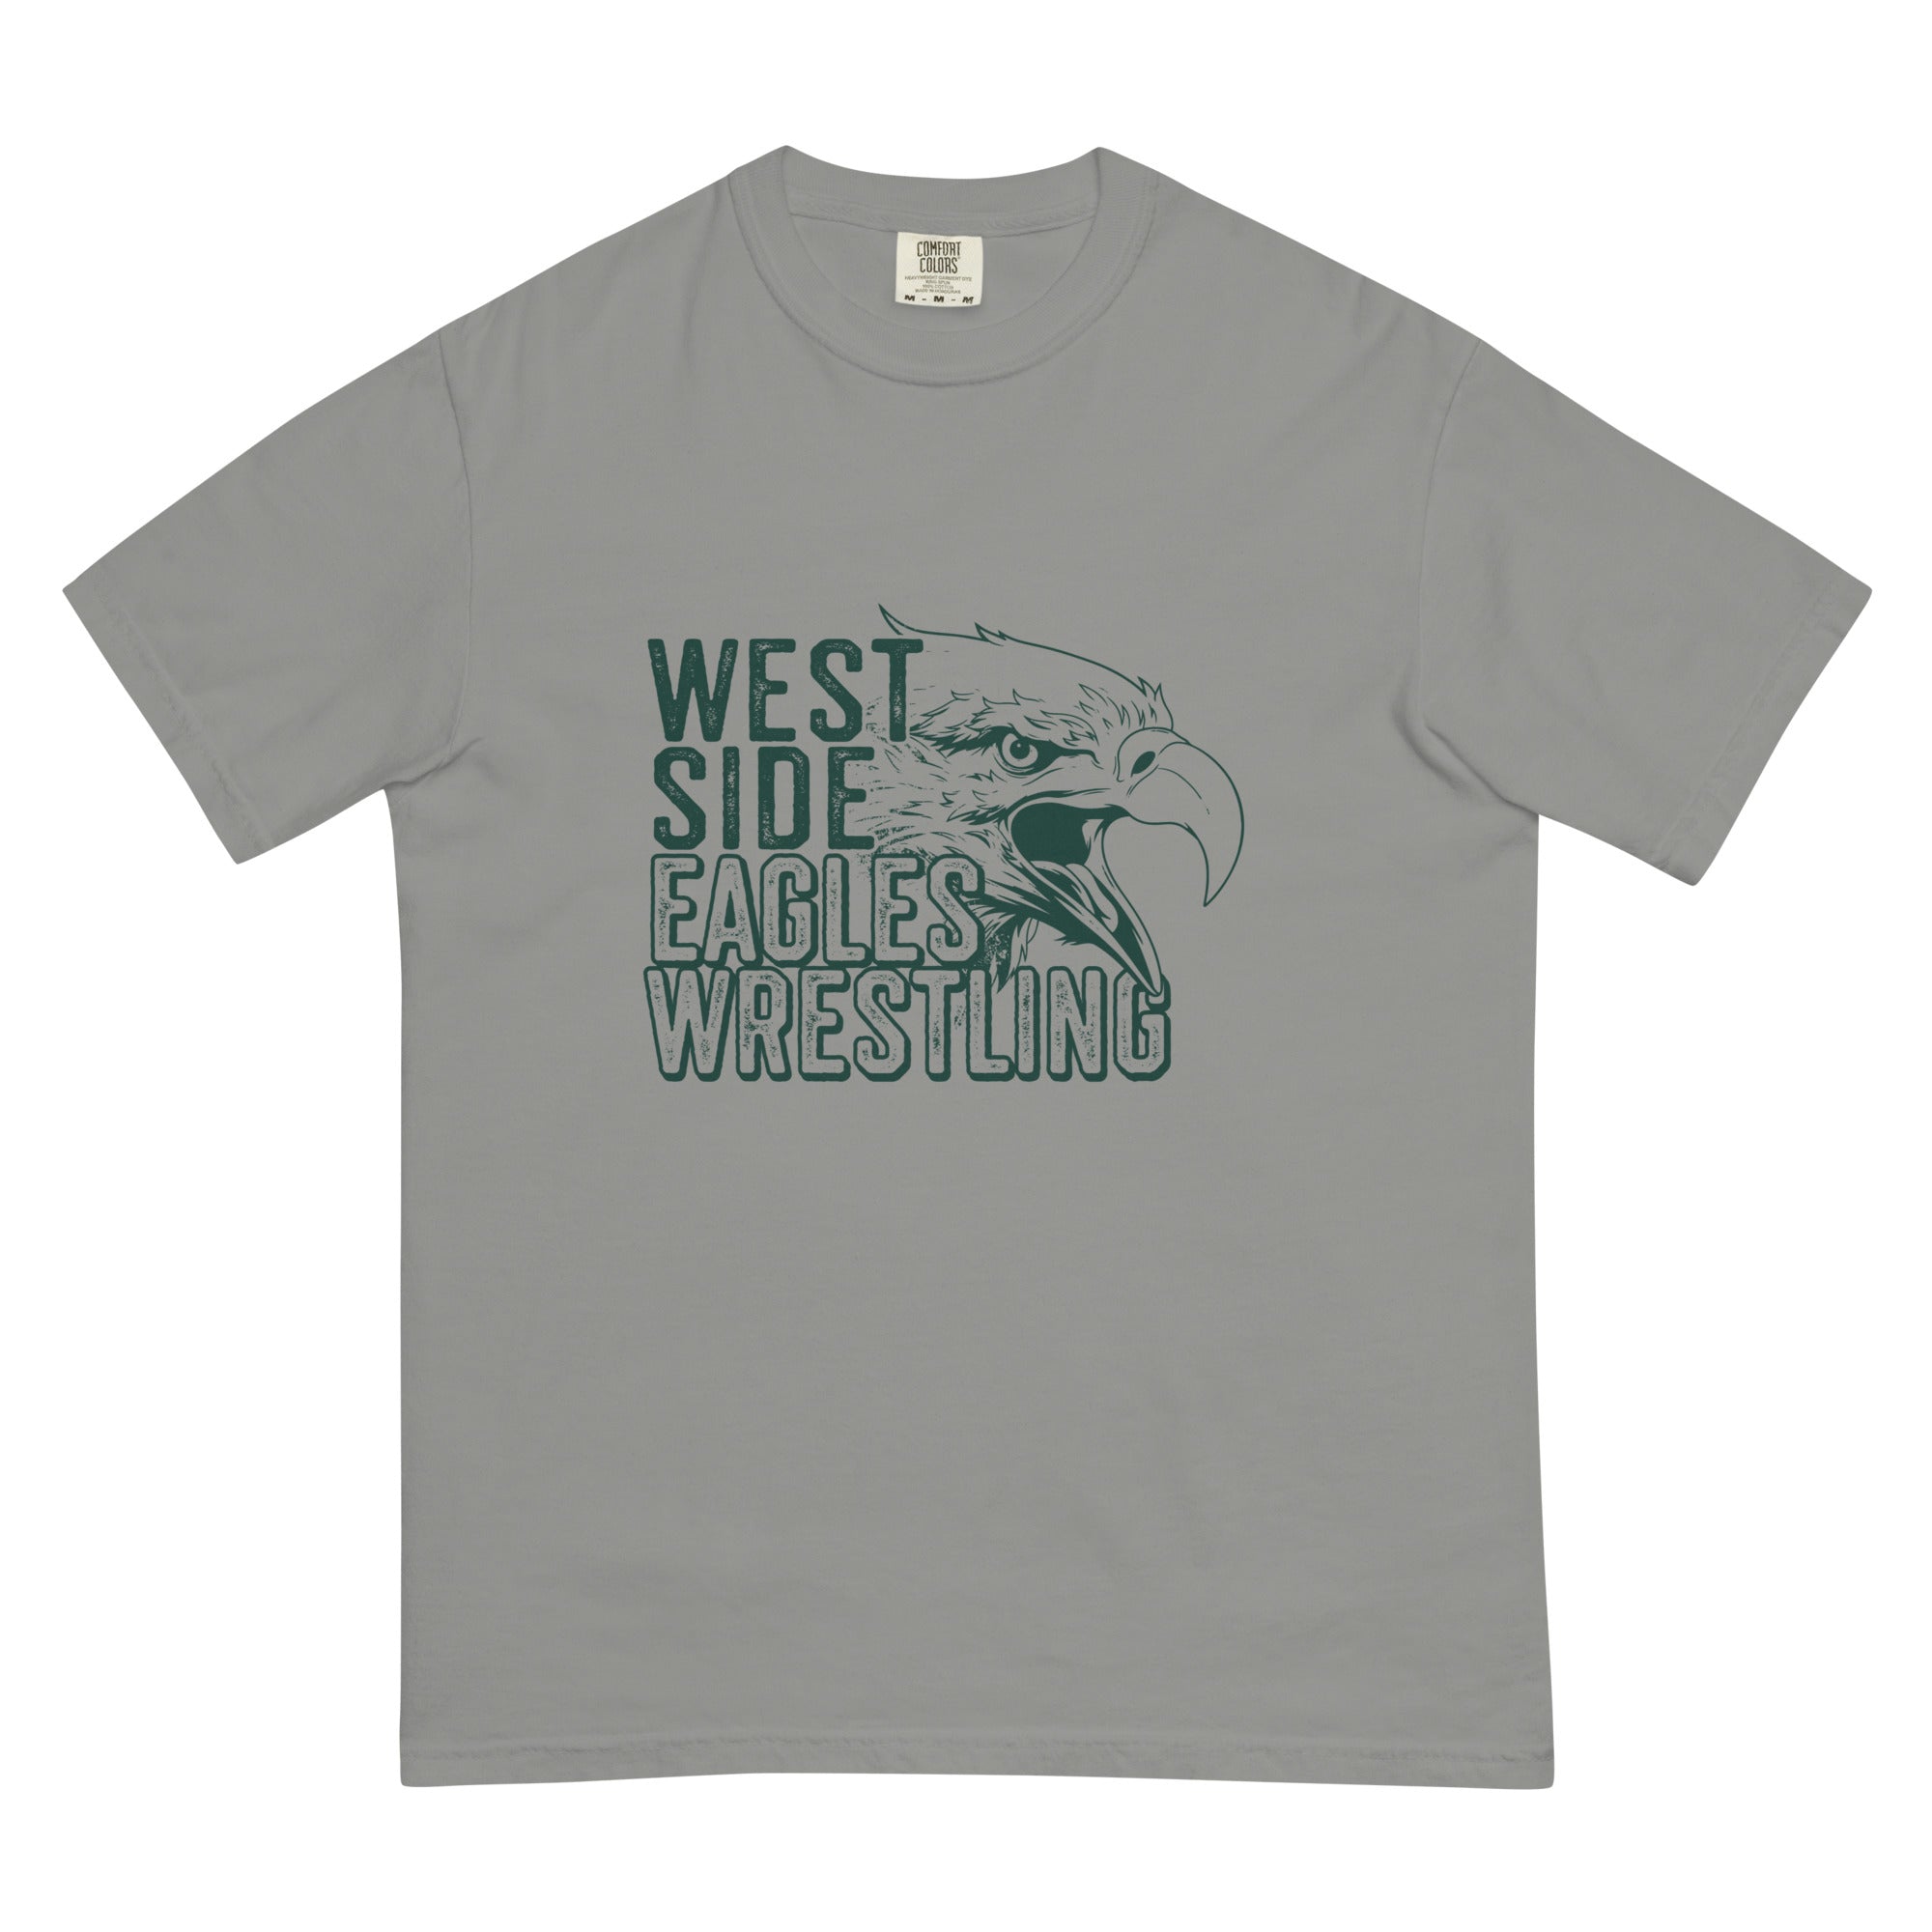 West Side Eagles Wrestling Men’s garment-dyed heavyweight t-shirt